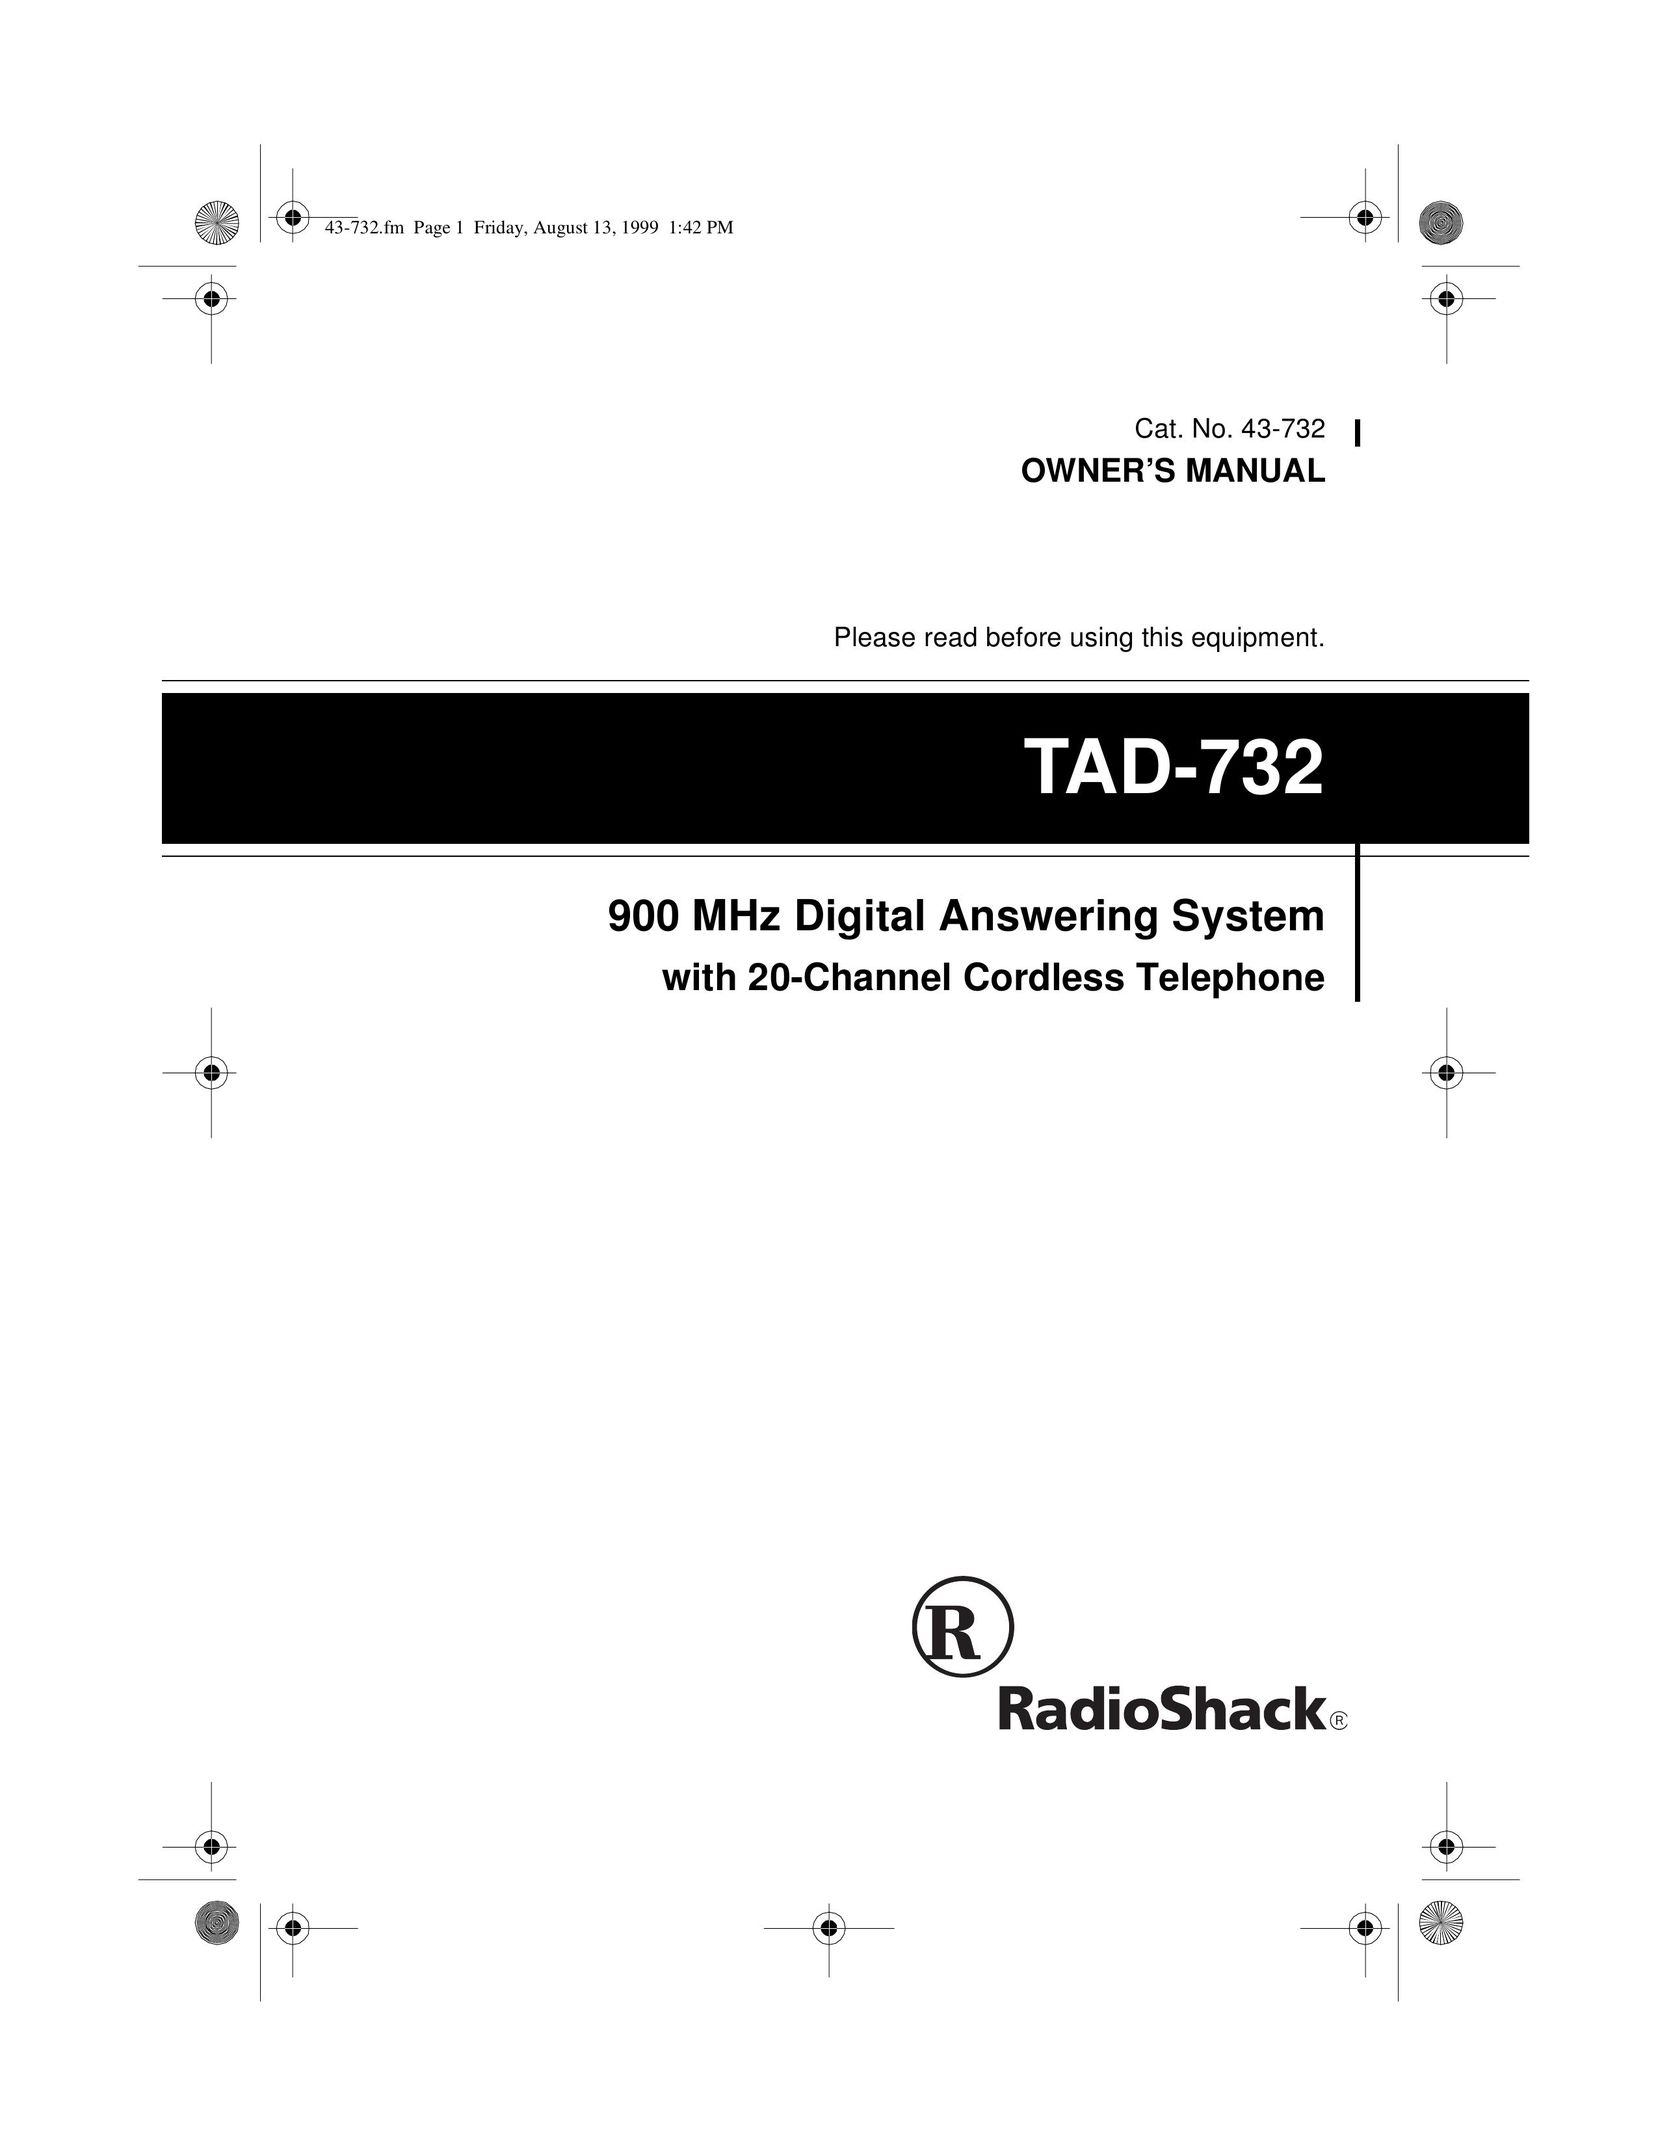 Radio Shack TAD-732 Answering Machine User Manual